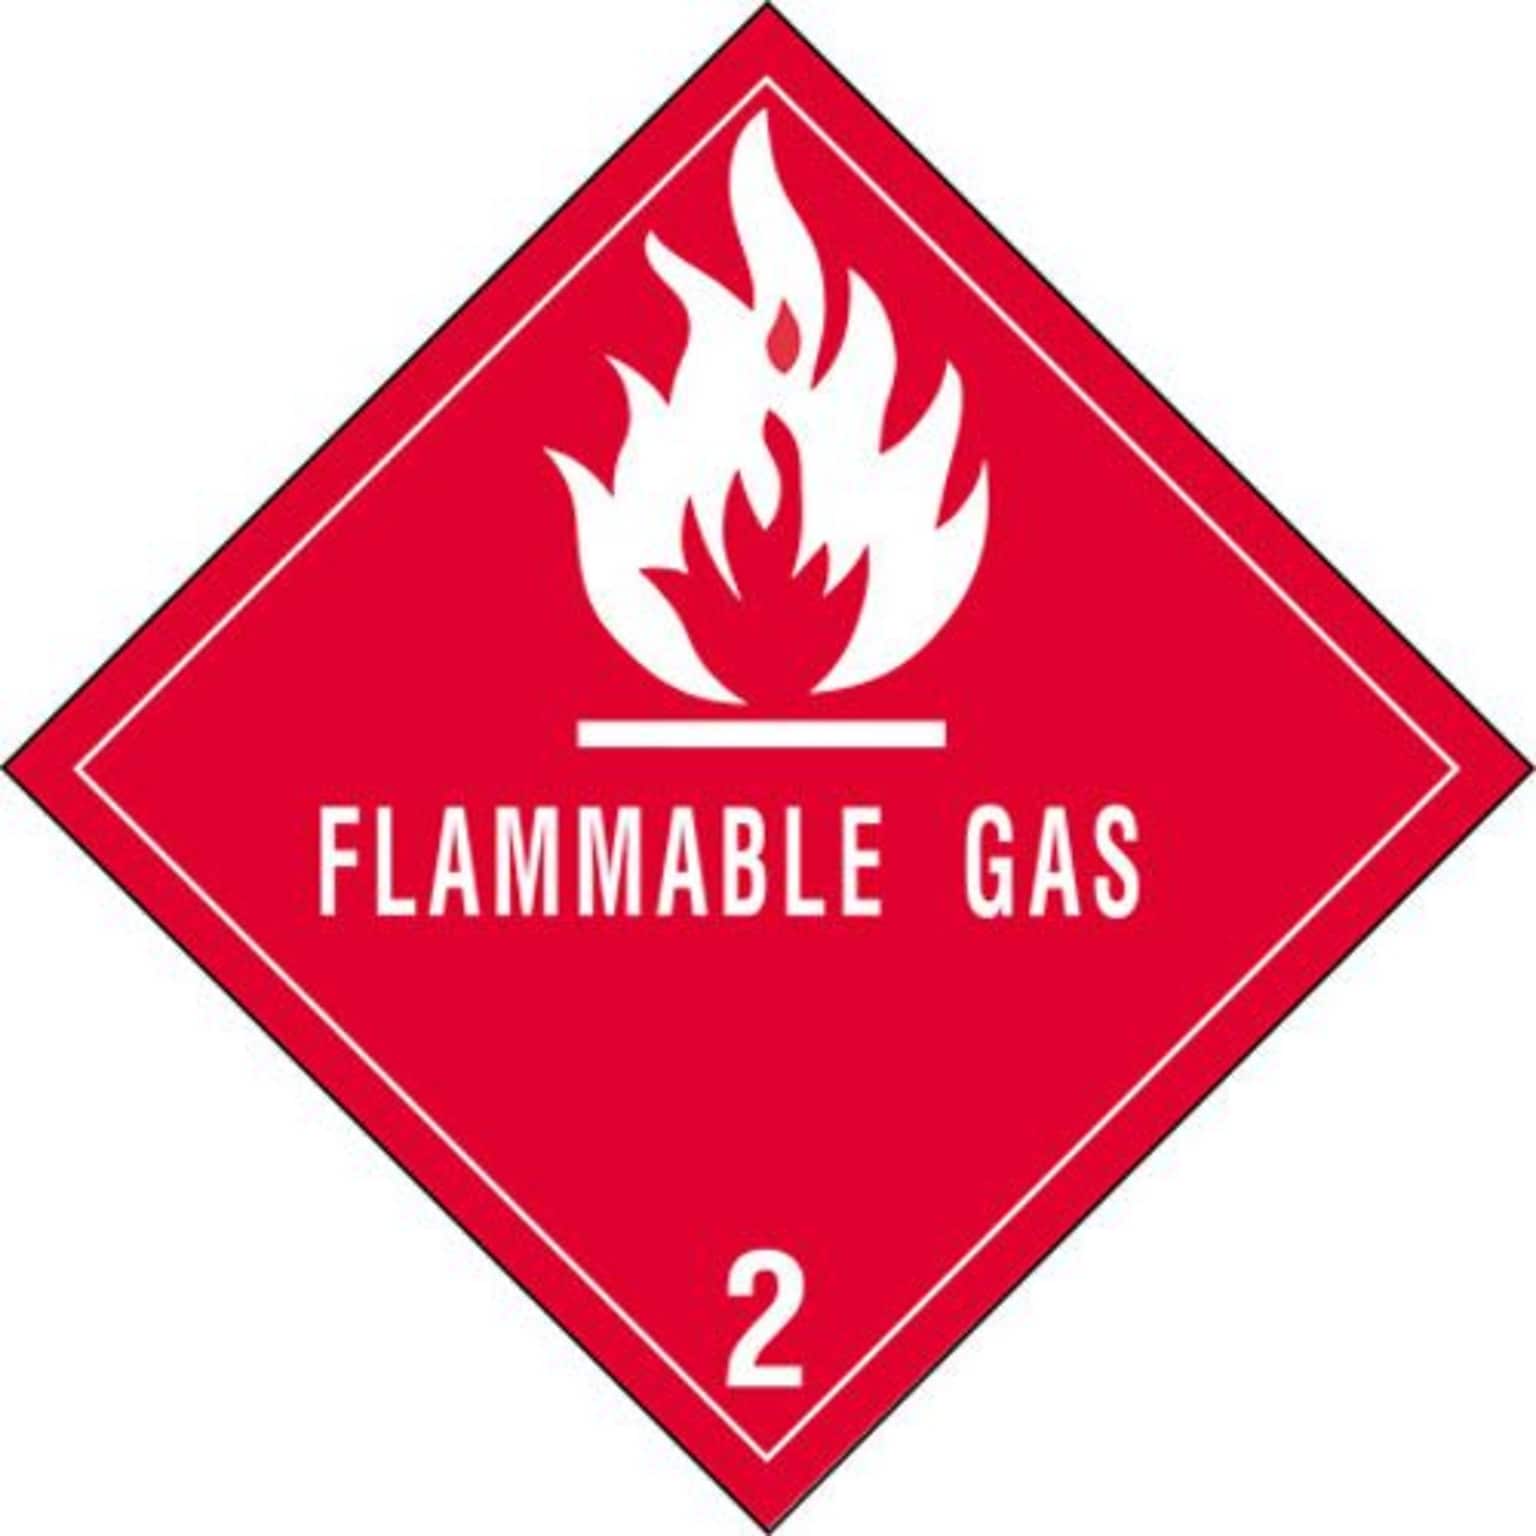 Tape Logic Flammable Gas - 2 Tape Logic Shipping Label, 4 x 4, 500/Roll